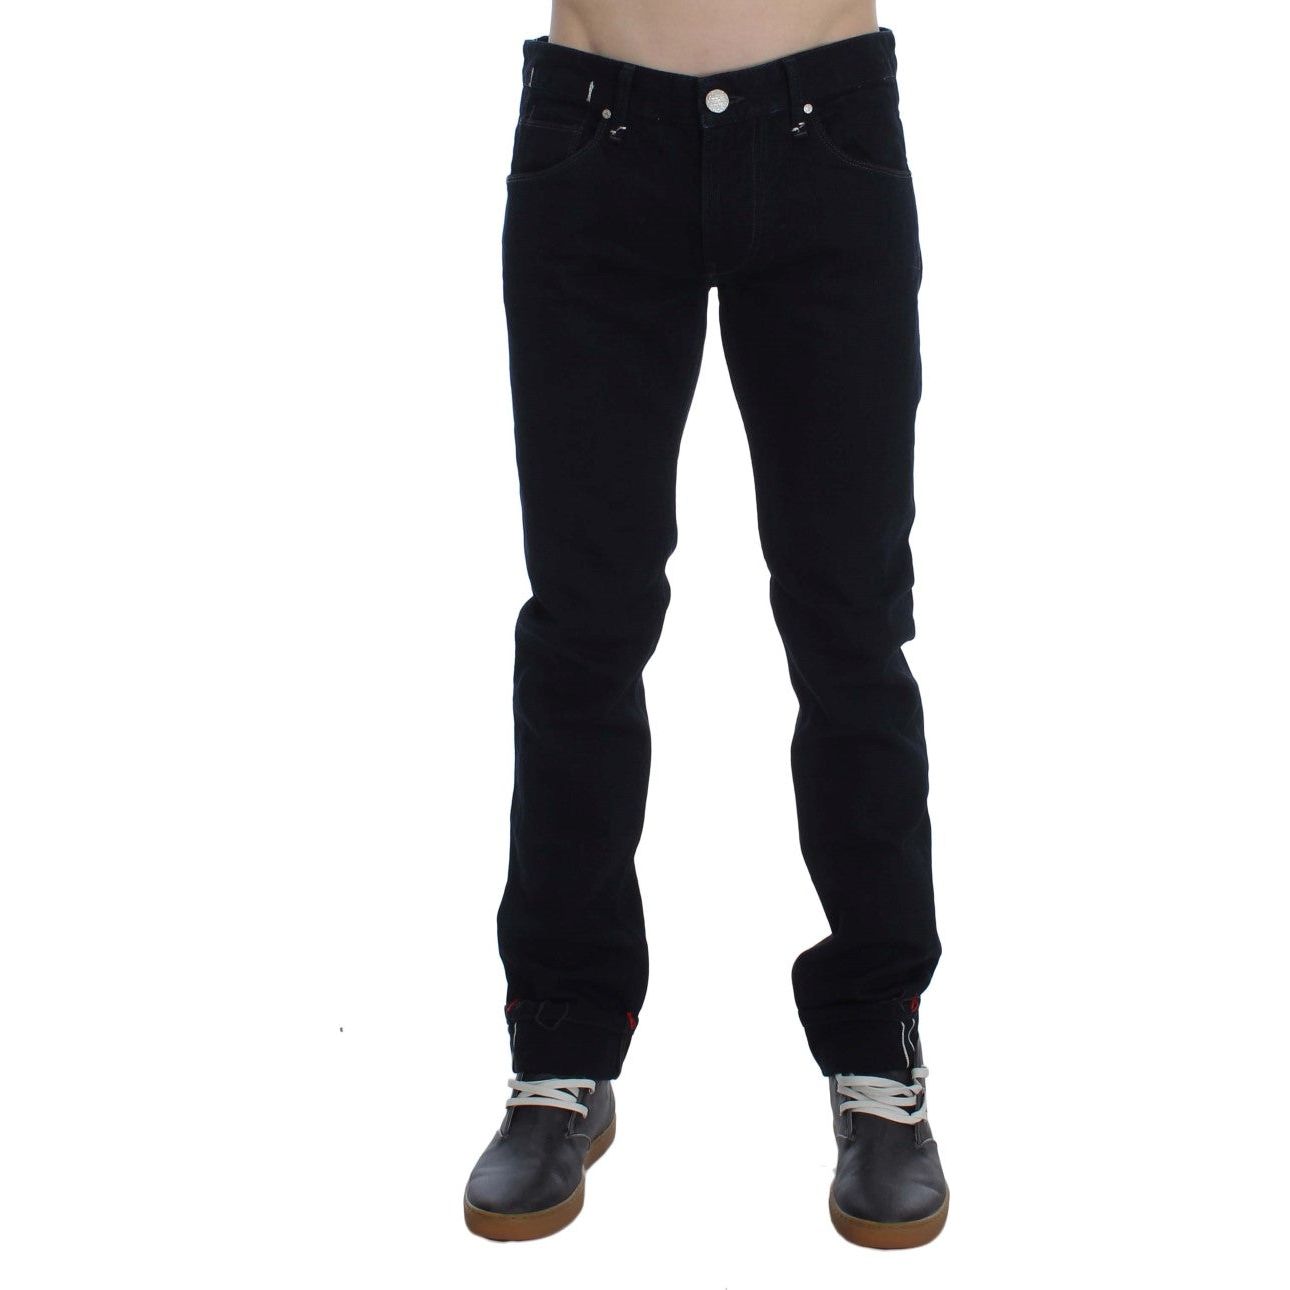 Acht Exquisite Slim Skinny Fit Men's Jeans dark-blue-corduroy-slim-skinny-fit-jeans 298973-dark-blue-corduroy-slim-skinny-fit-jeans-1.jpg